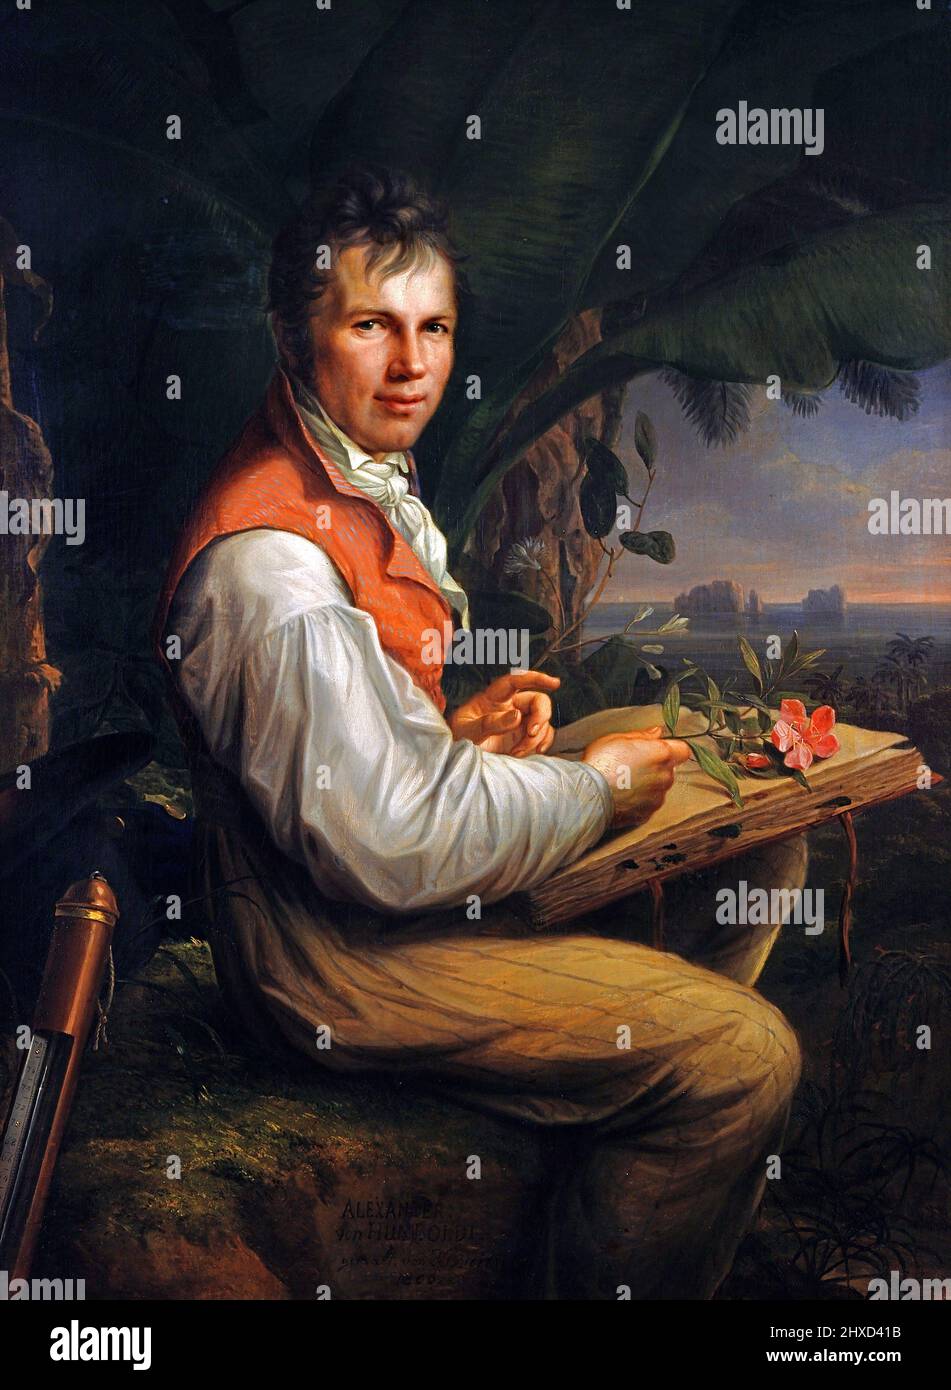 Ritratto del naturalista ed esploratore tedesco, Alexander von Humboldt (1769-1859) di Friedrich Georg Weitsch, olio su tela, 1806 Foto Stock